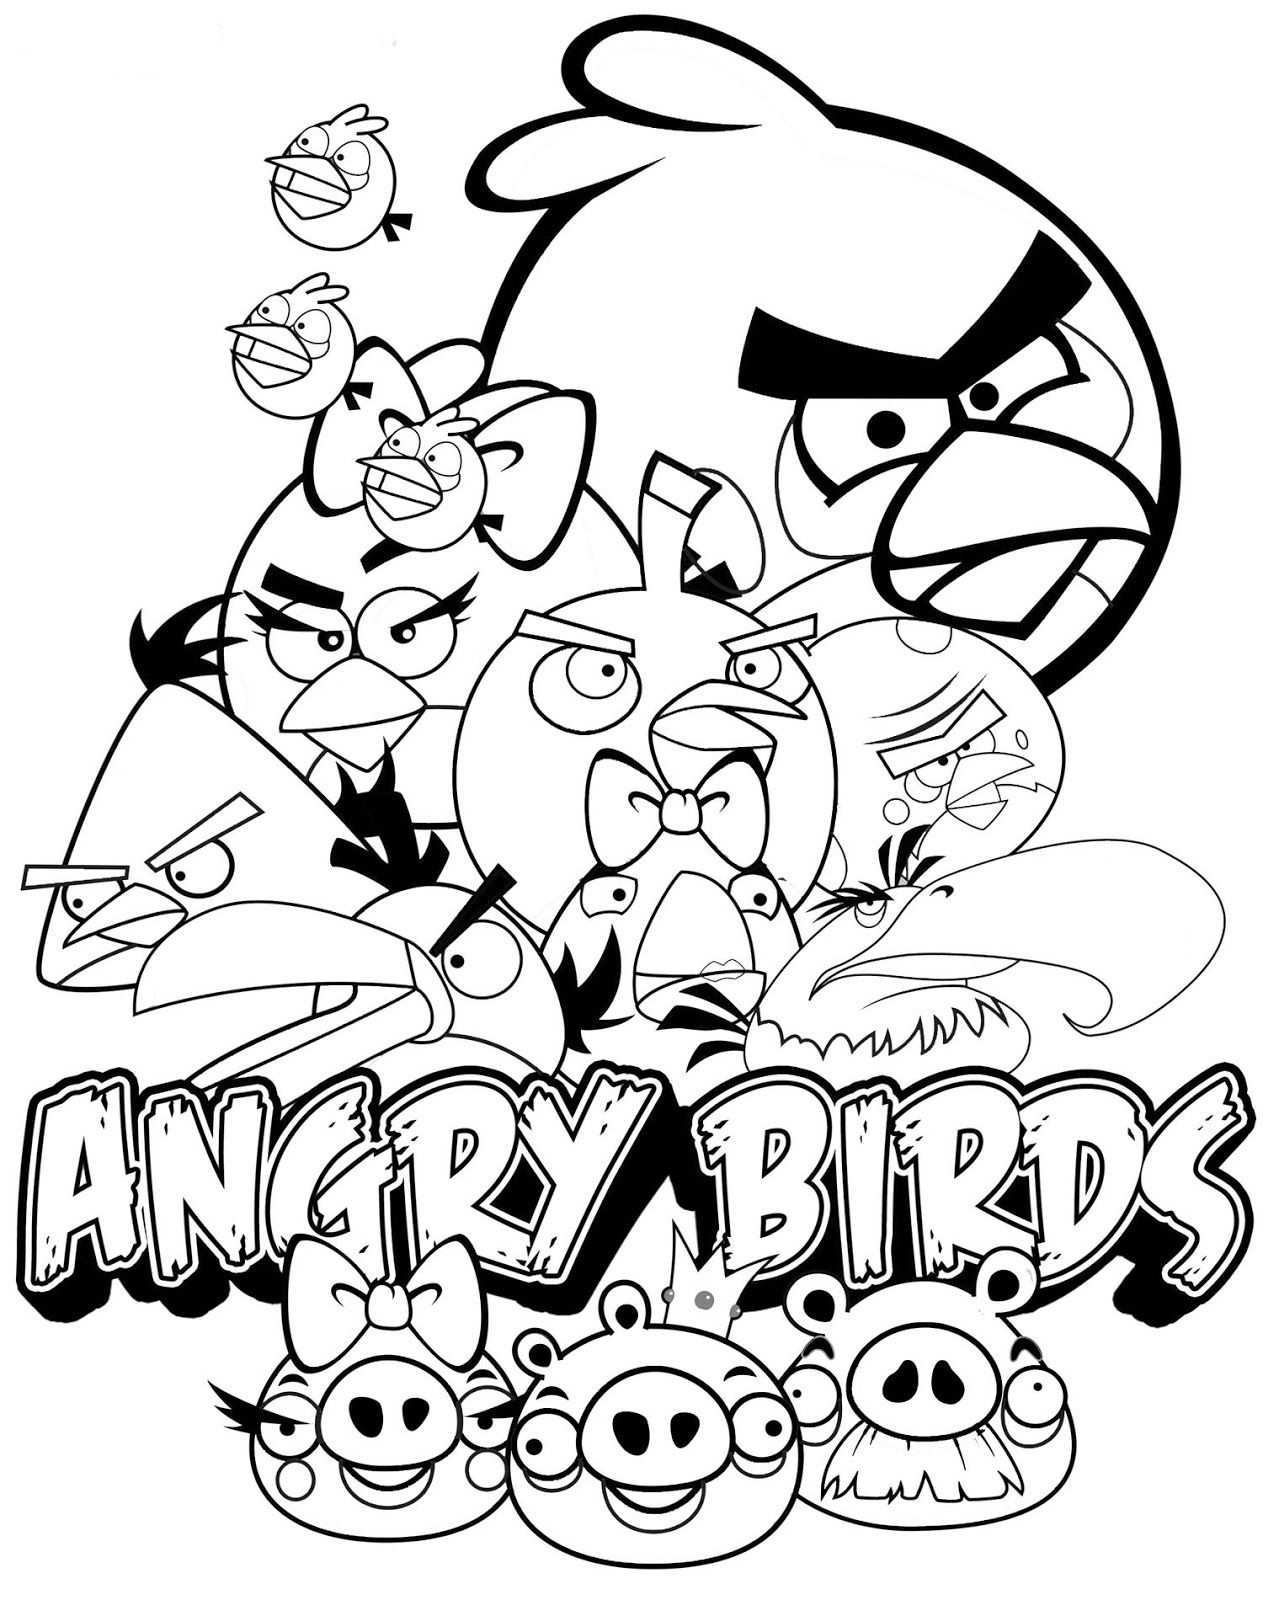 Angry Birds Kleurplaten Poster Bird Coloring Pages Coloring Pages Coloring Pages For